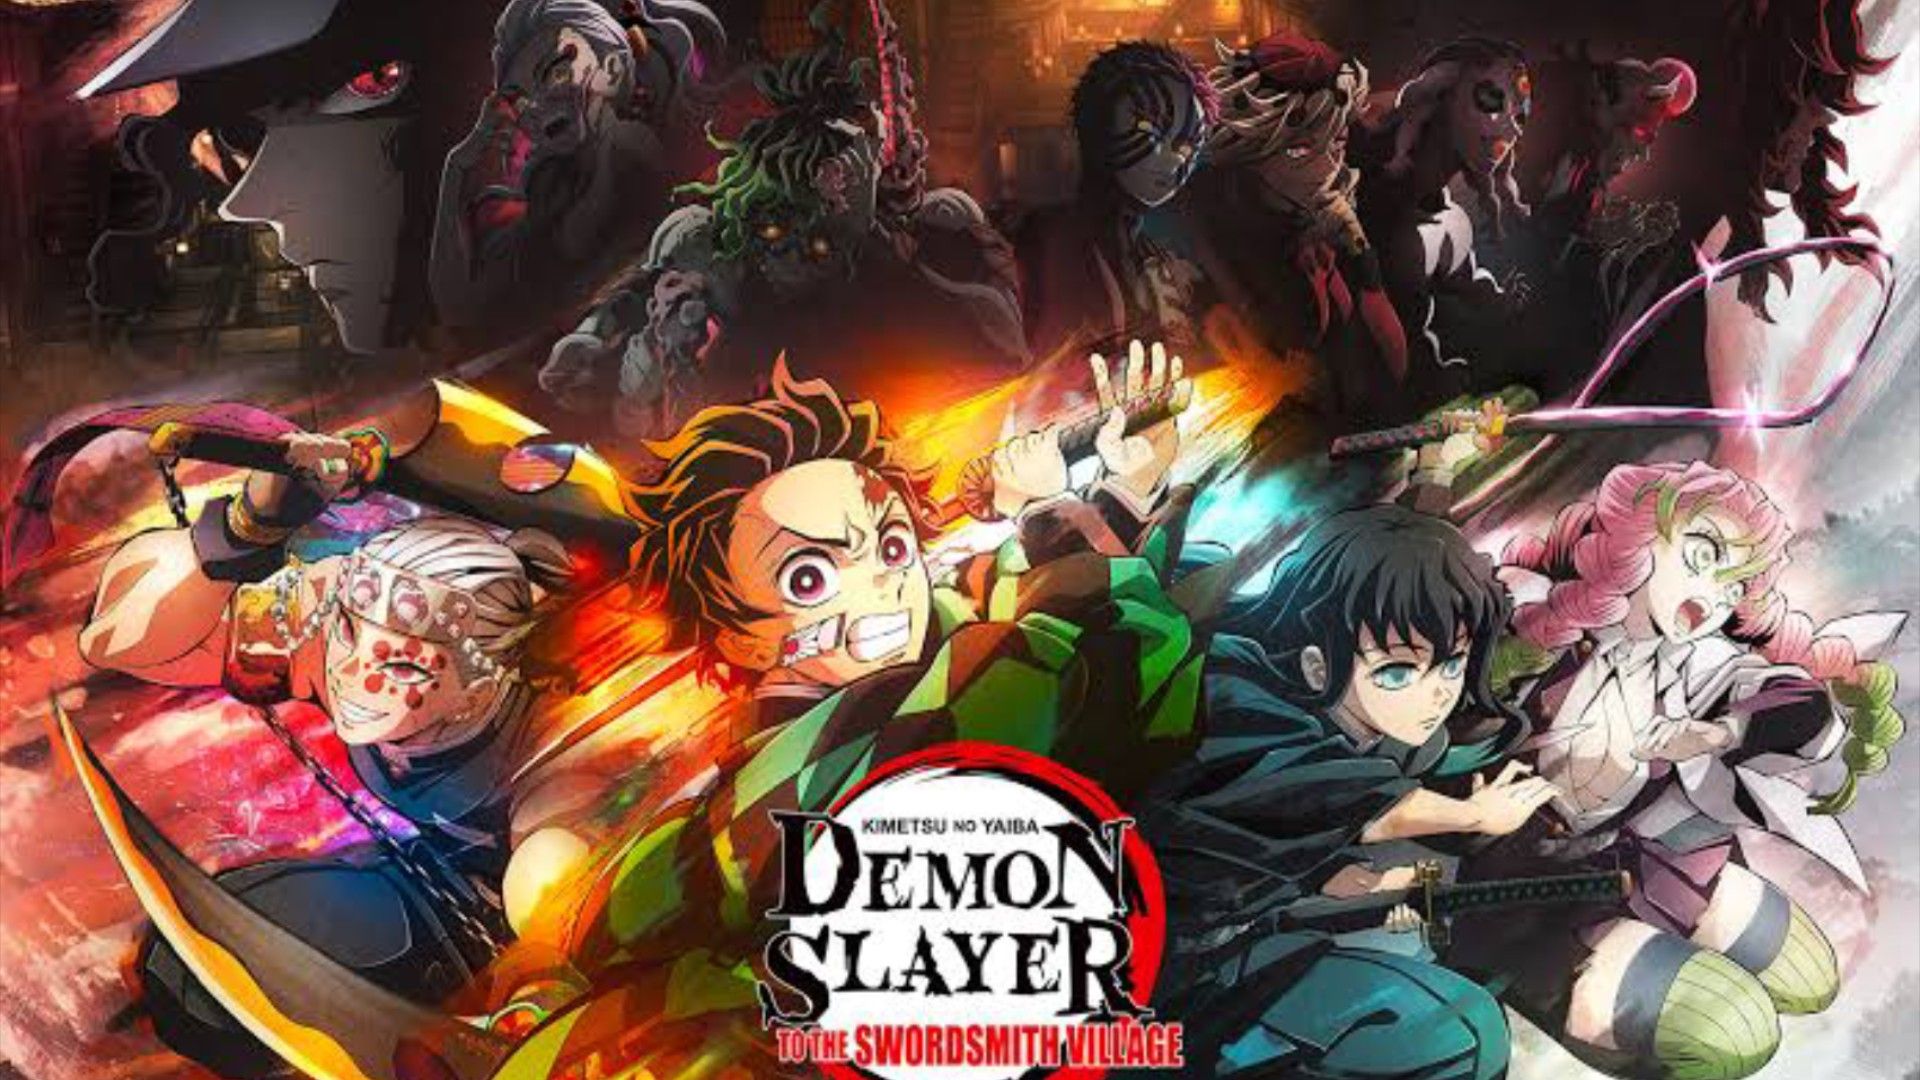 Demon slayer Season 3 Episode 1 ╭ ╌ ╮╎ও✦˙🌷ʜᴀᴠᴇ ᴀ ɢᴏᴏᴅ ᴅᴀʏ/ɴɪɢʜᴛ🎀 ╏🌸 ╏╎  彡ᴛᴜʀɴ ᴏɴ ɴᴏᴛɪғɪᴄᴀᴛɪᴏɴs🔔 ╰ ╌ ╯╰╴╴╴╴➤ 𝑾𝒆𝒍𝒄𝒐𝒎𝒆 𝑻𝒐 𝑵𝒆𝒛𝒖𝒌𝒐'𝒔…